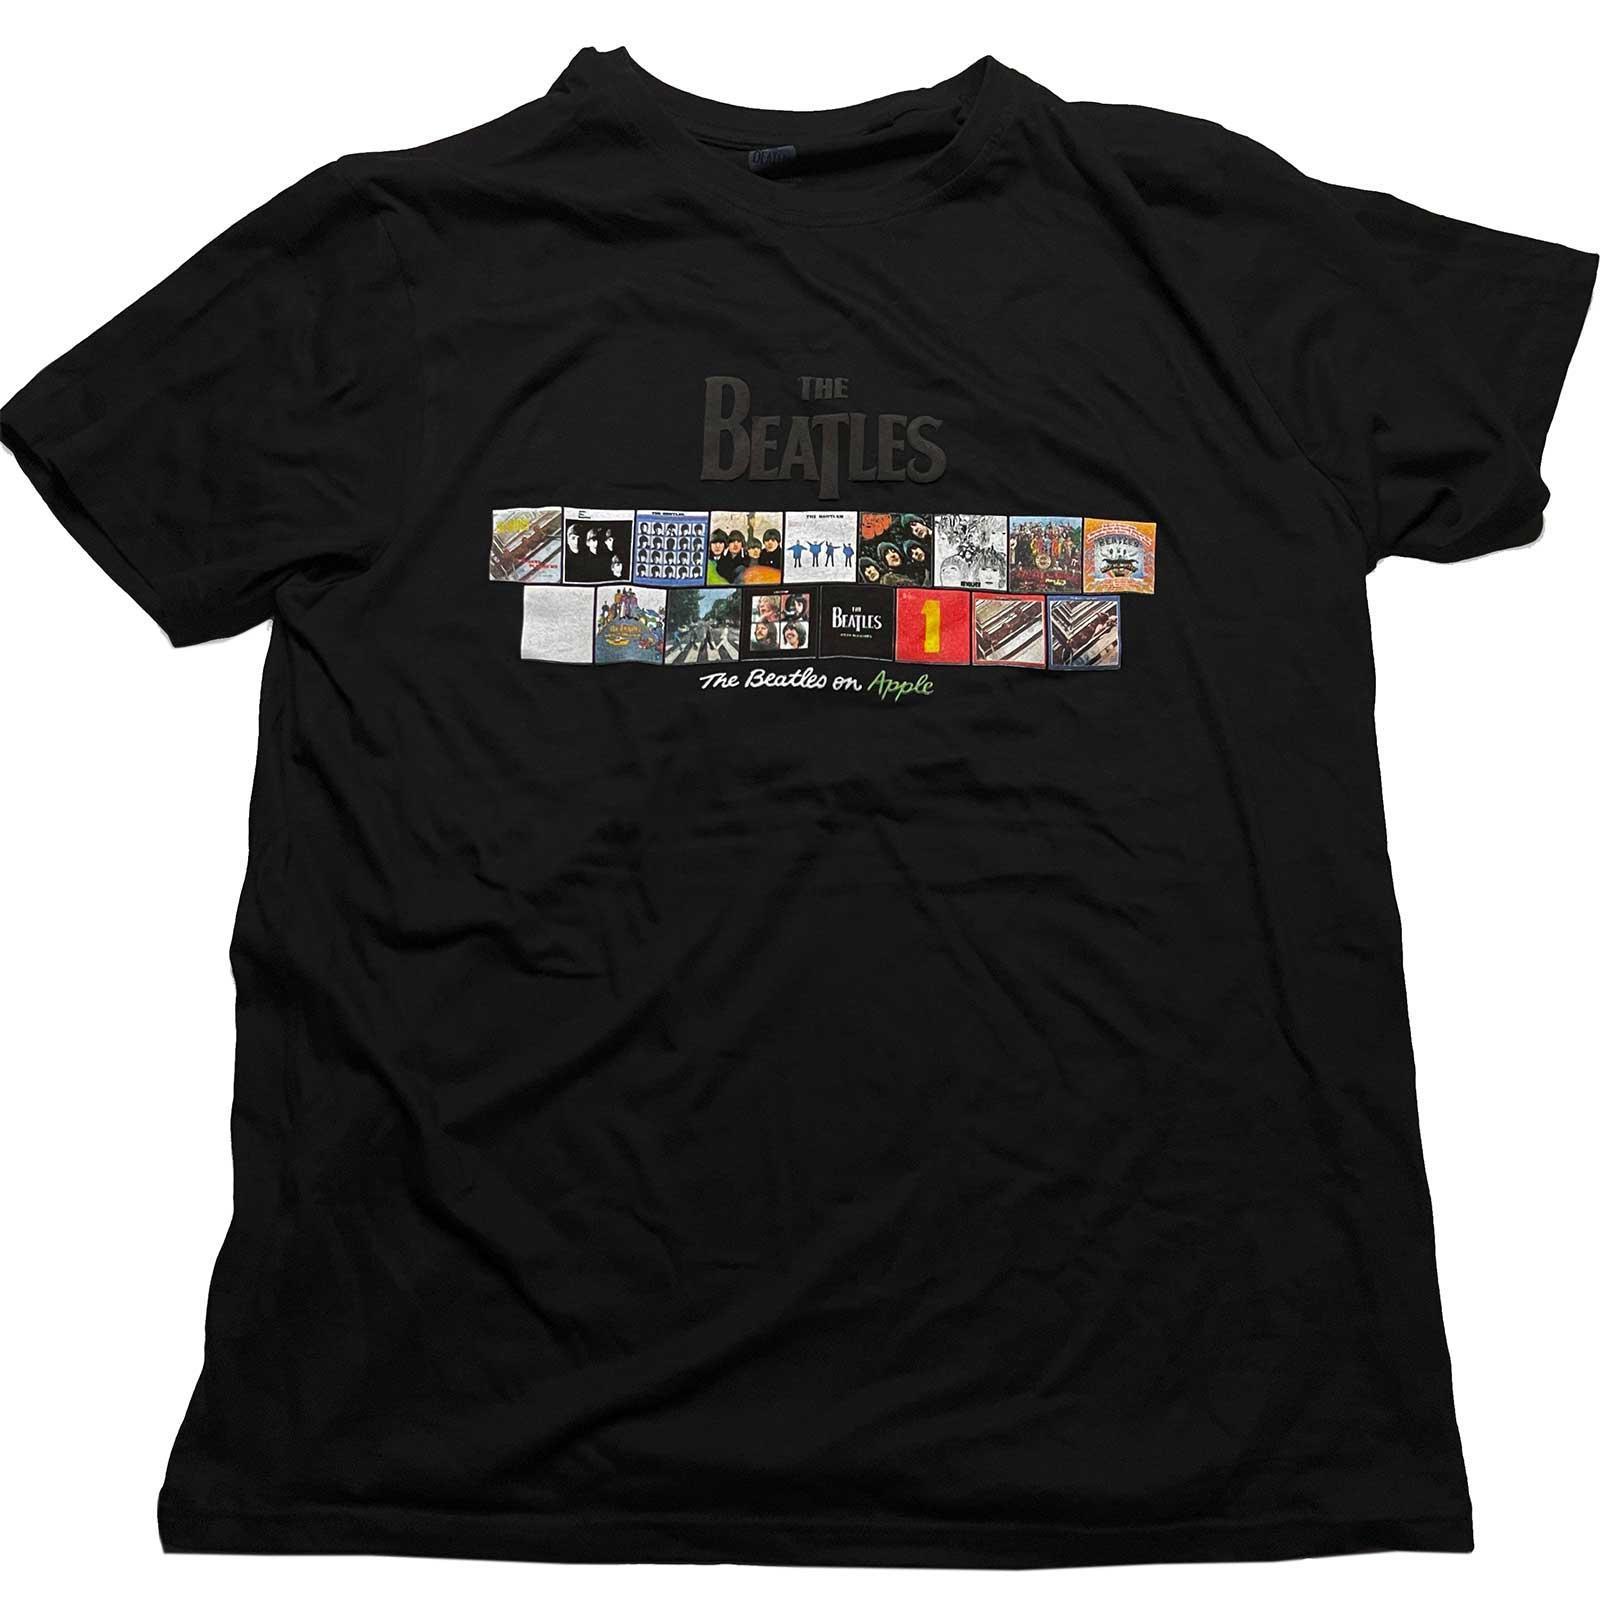 The Beatles Unisex Adult Albums on Apple Cotton T-Shirt (Black) (XL)